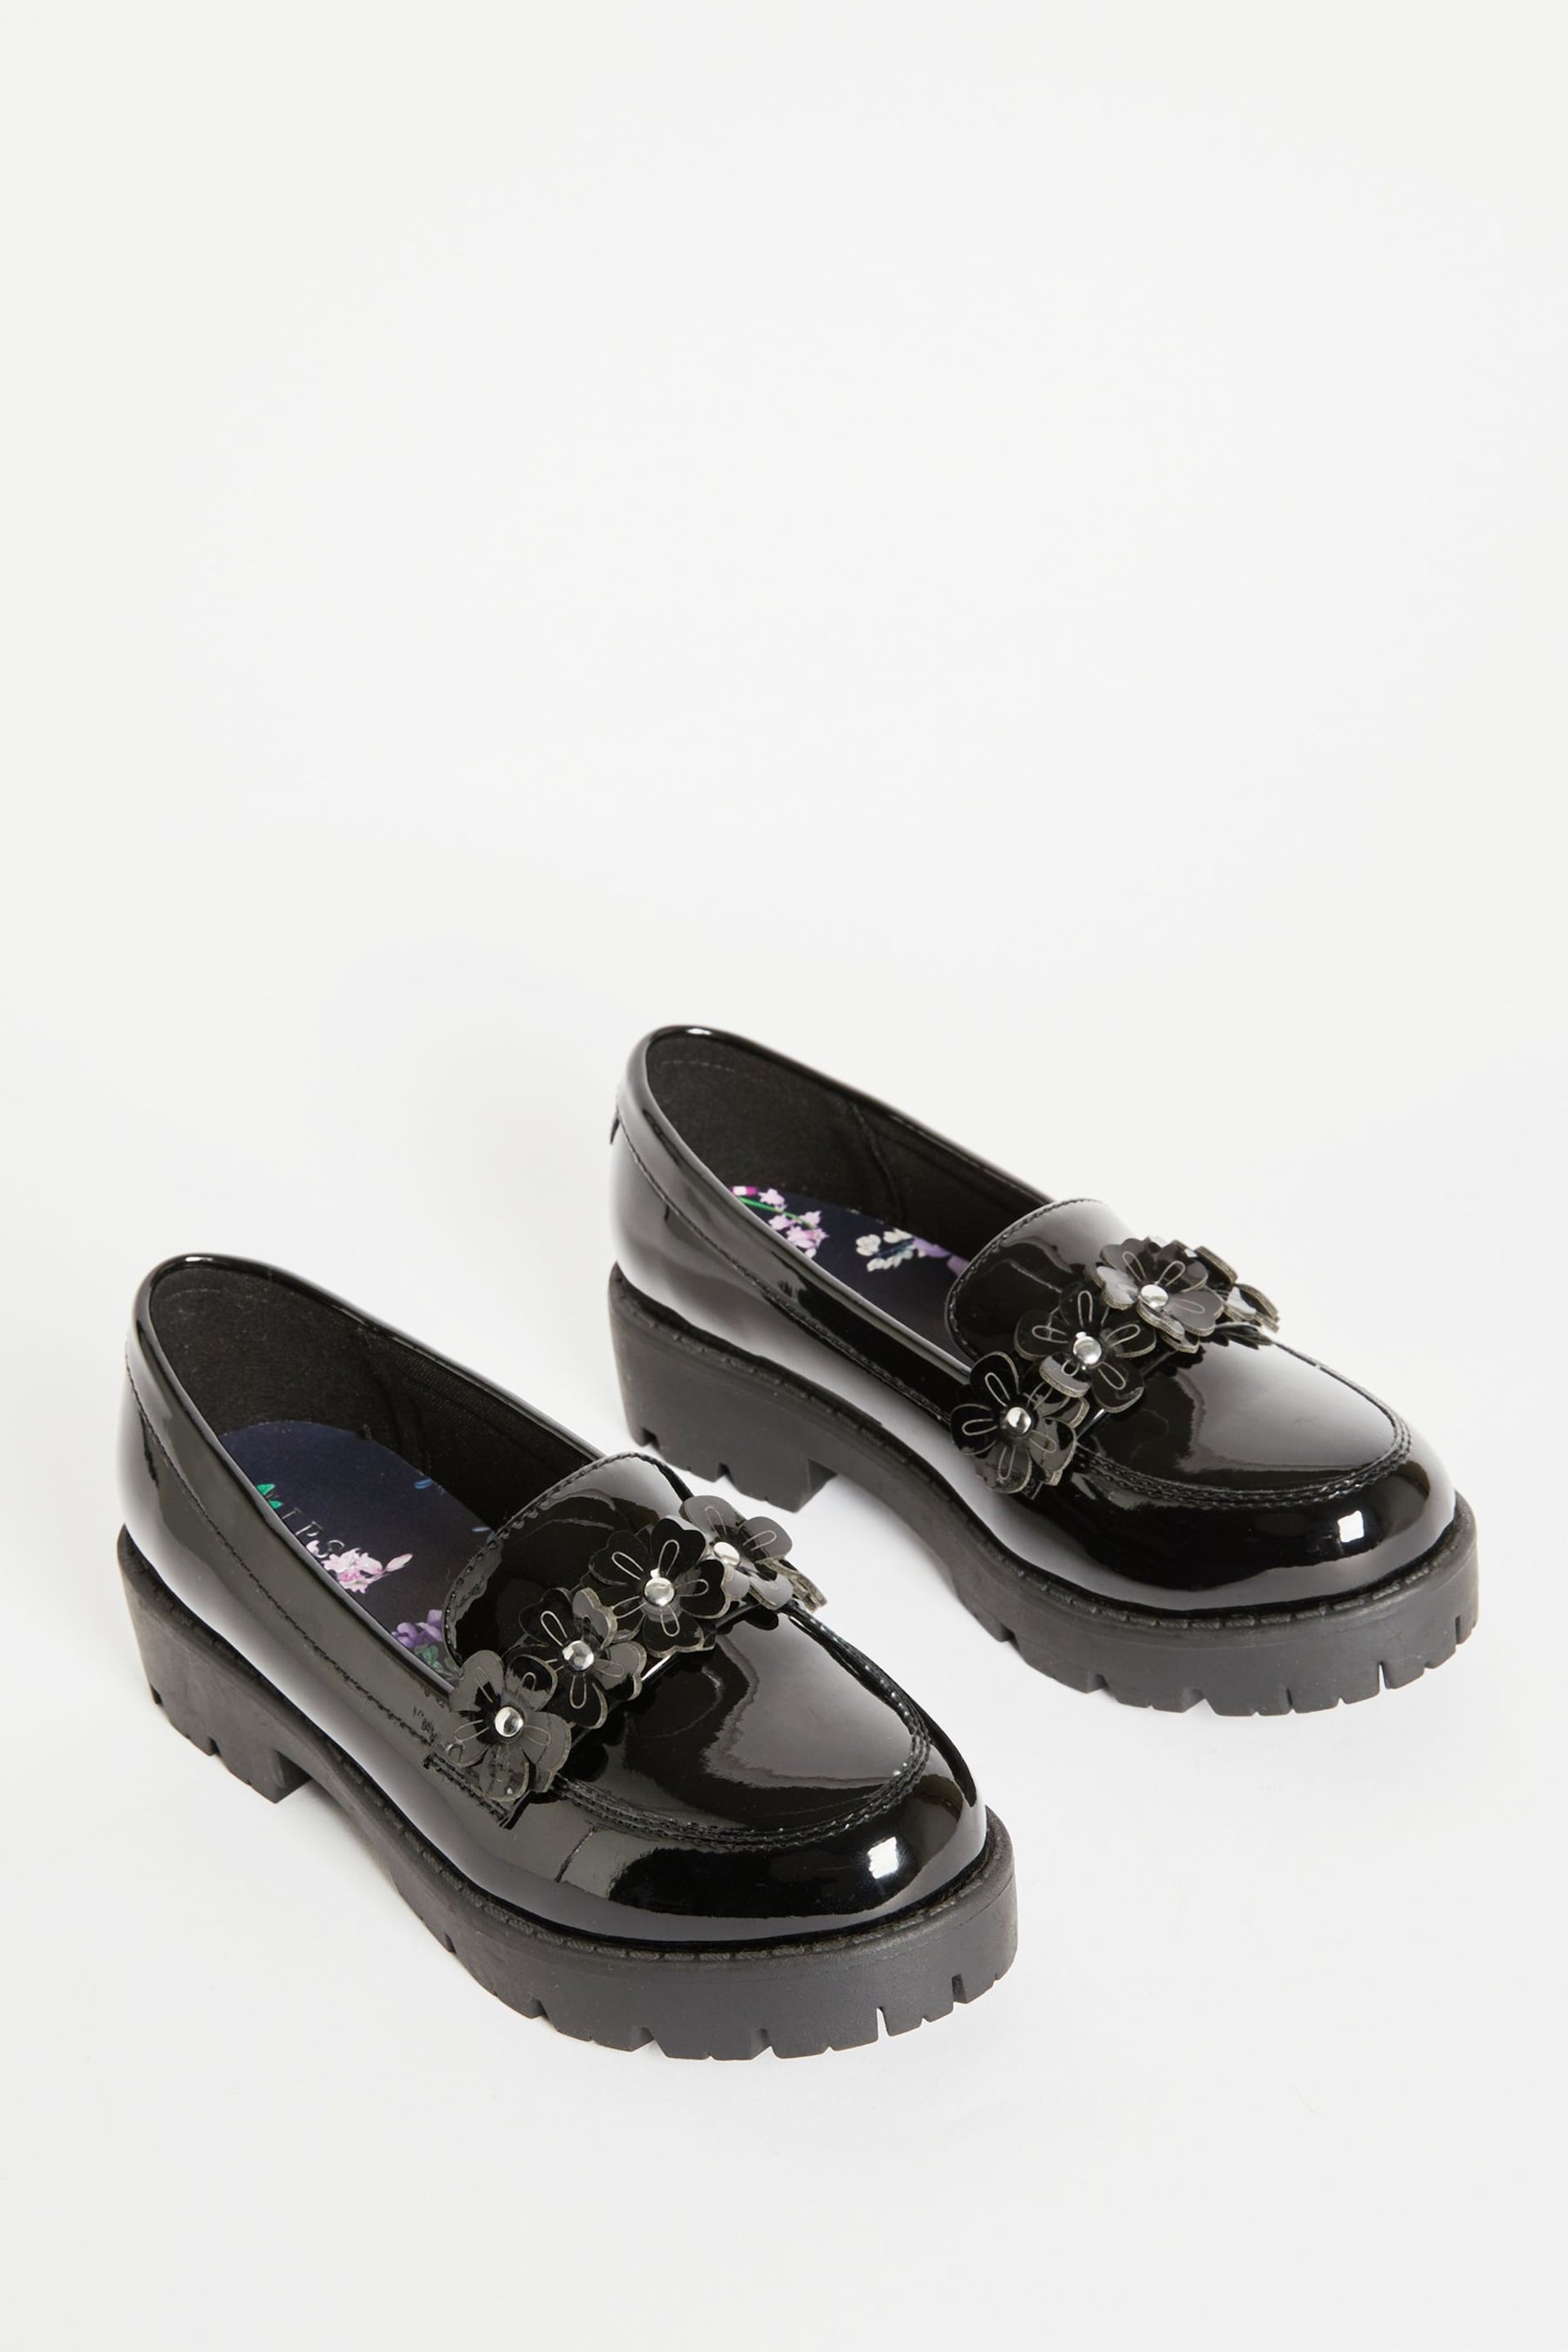 Lipsy Black Flower Slip On Loafer School Shoe - Image 5 of 7